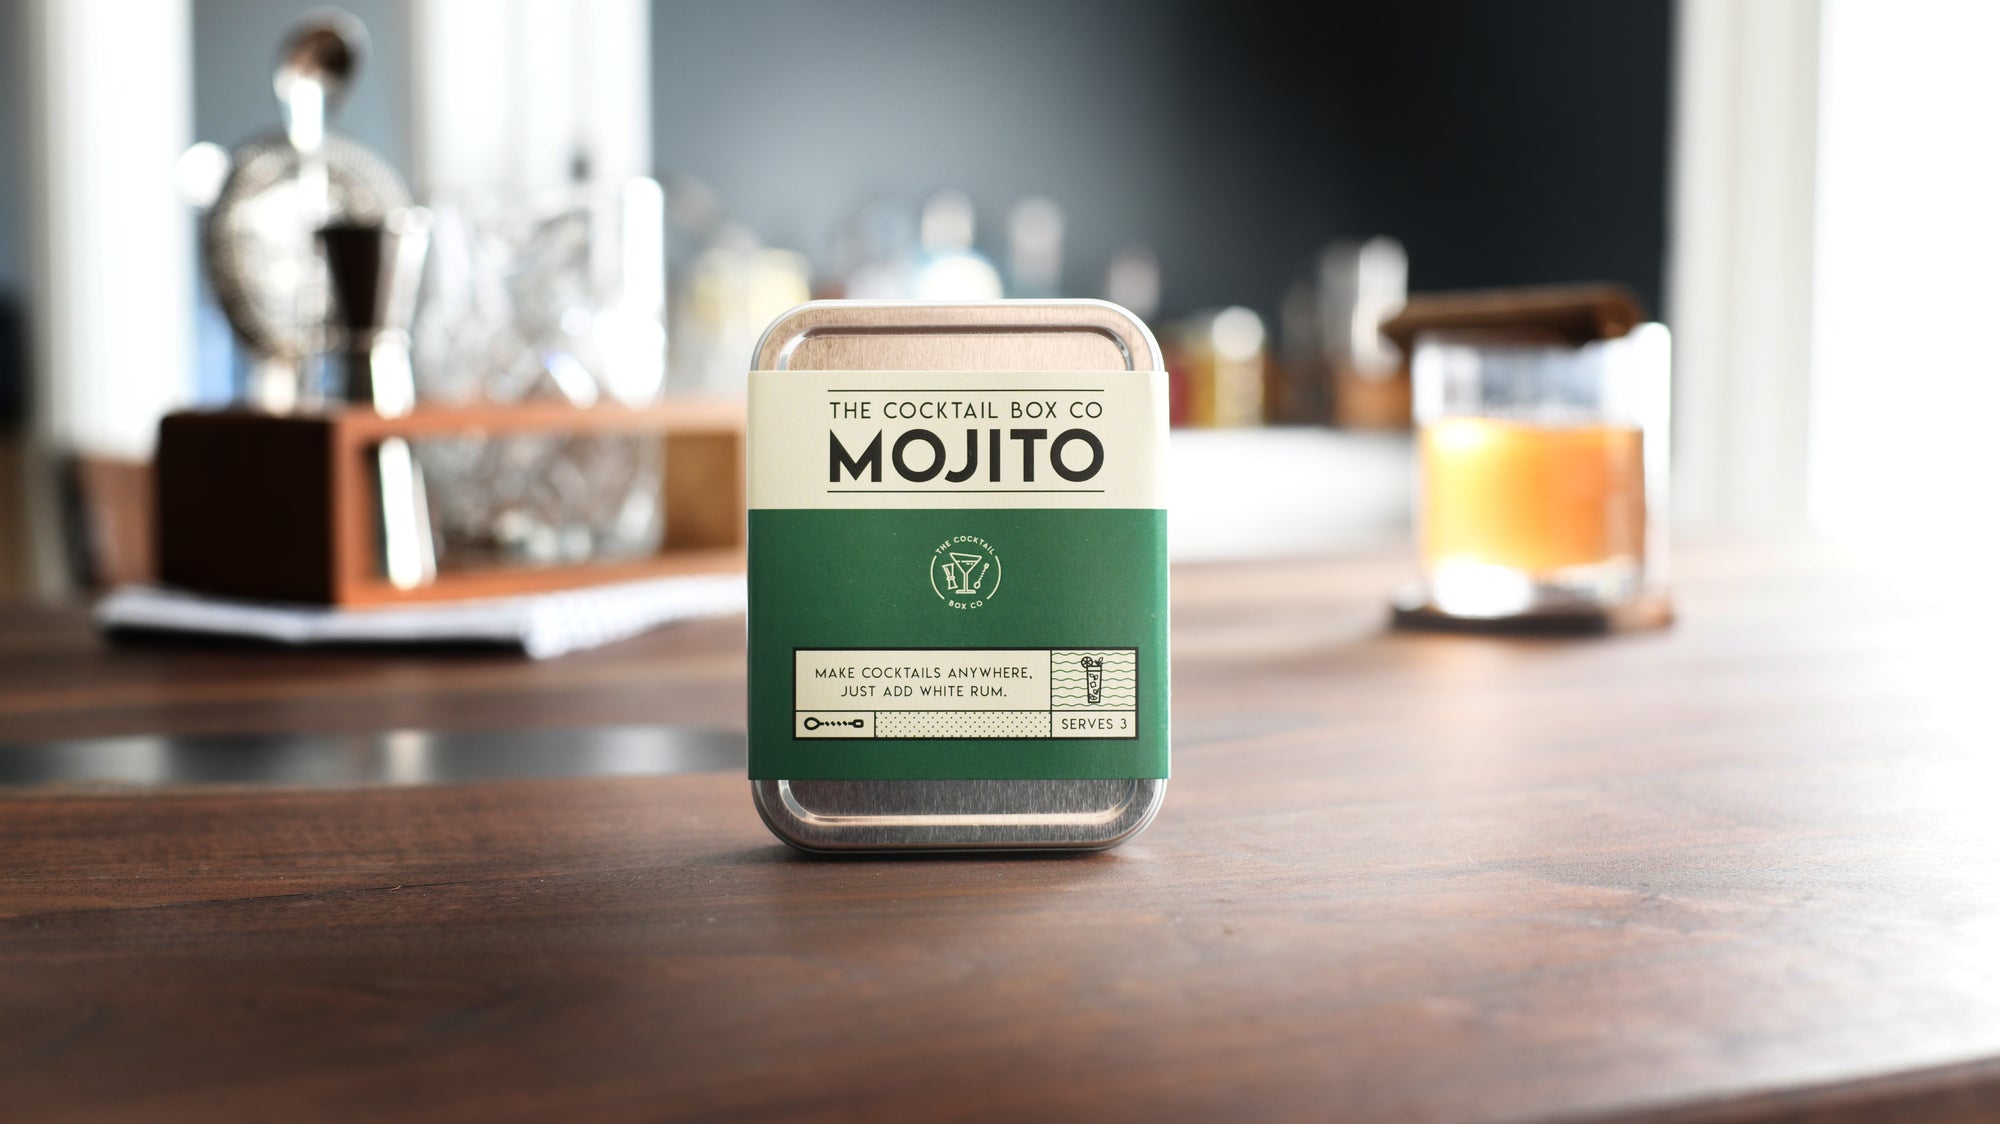 2 Pack - Mojito Cocktail Kit Gift Set